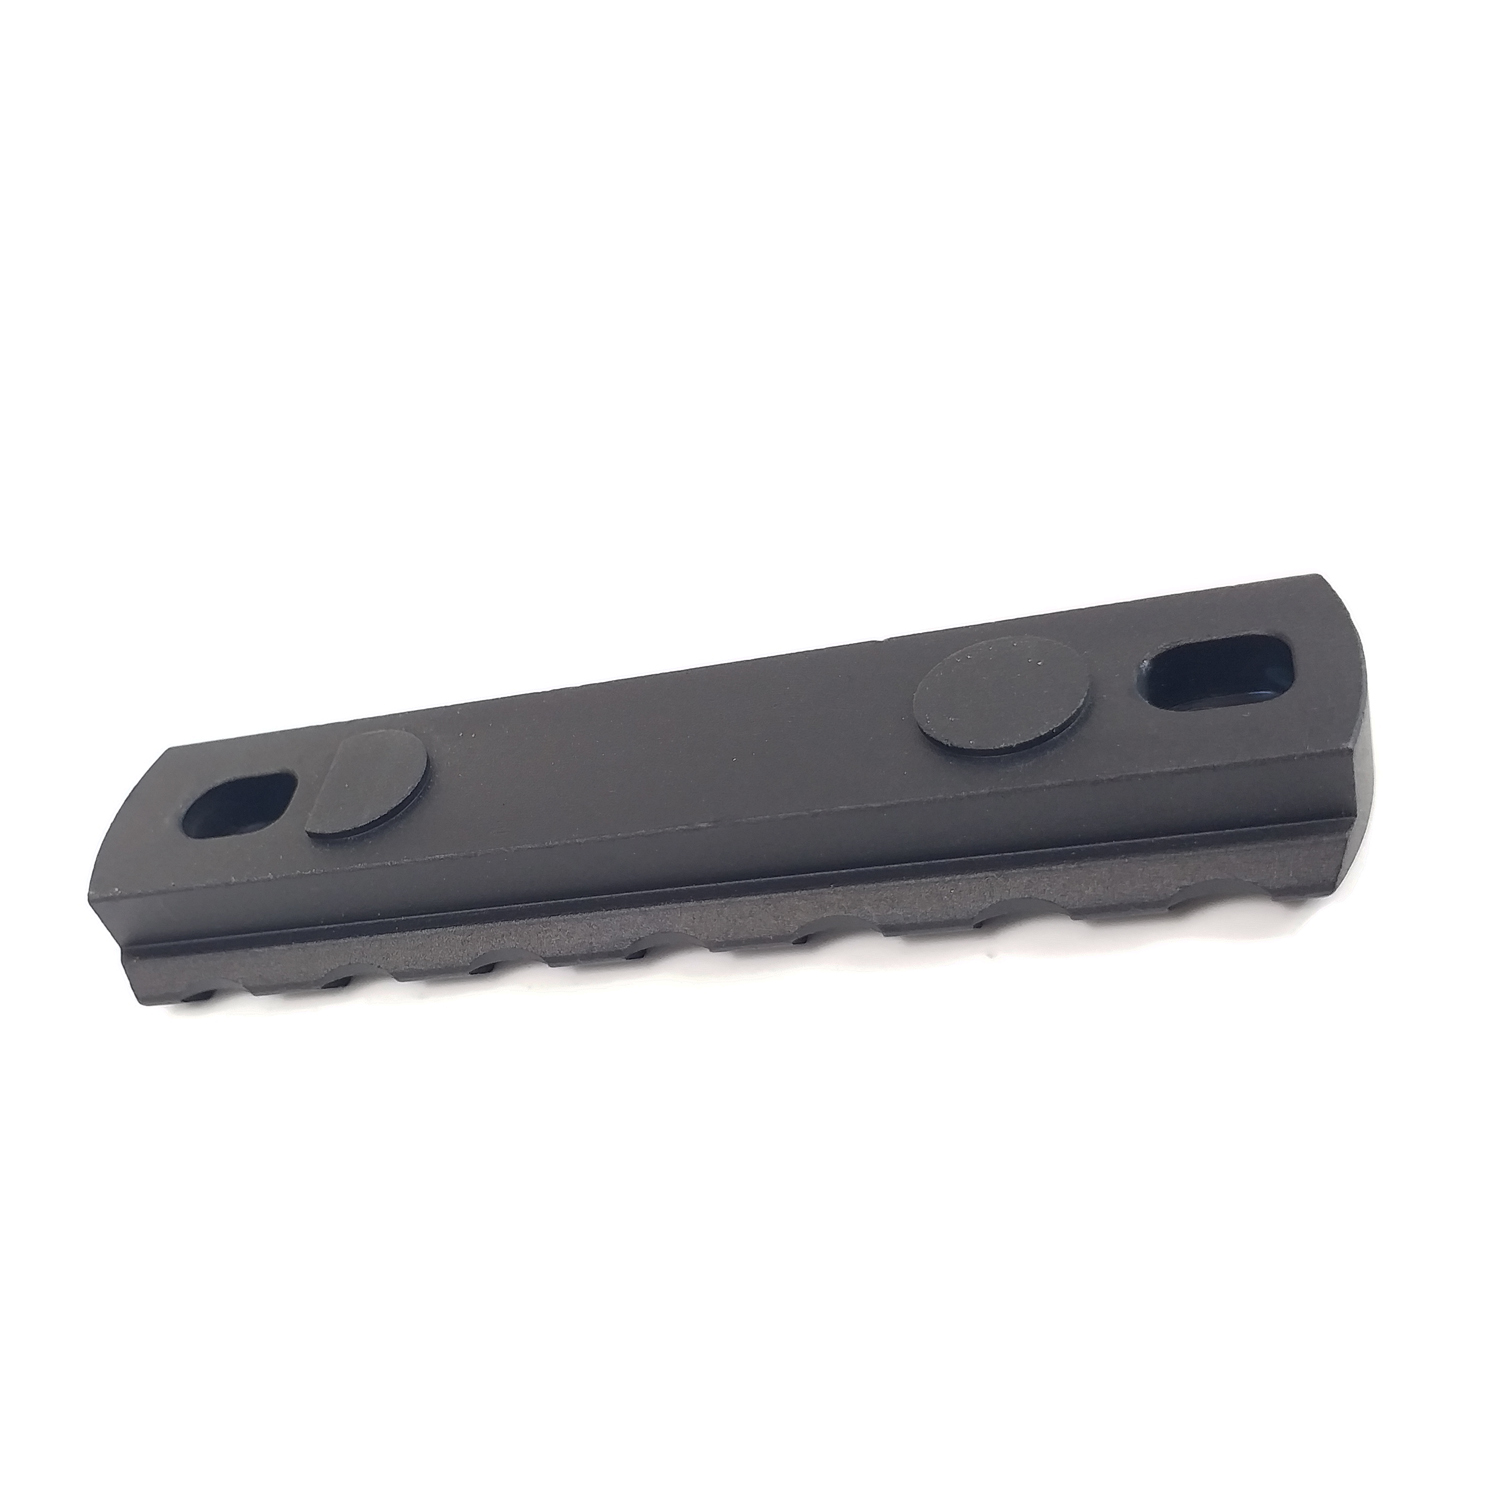 5,7,9,11,13 slot CNC Aluminum Picatinny Rail Section For Keymod Handguards Balck color RSK-xB